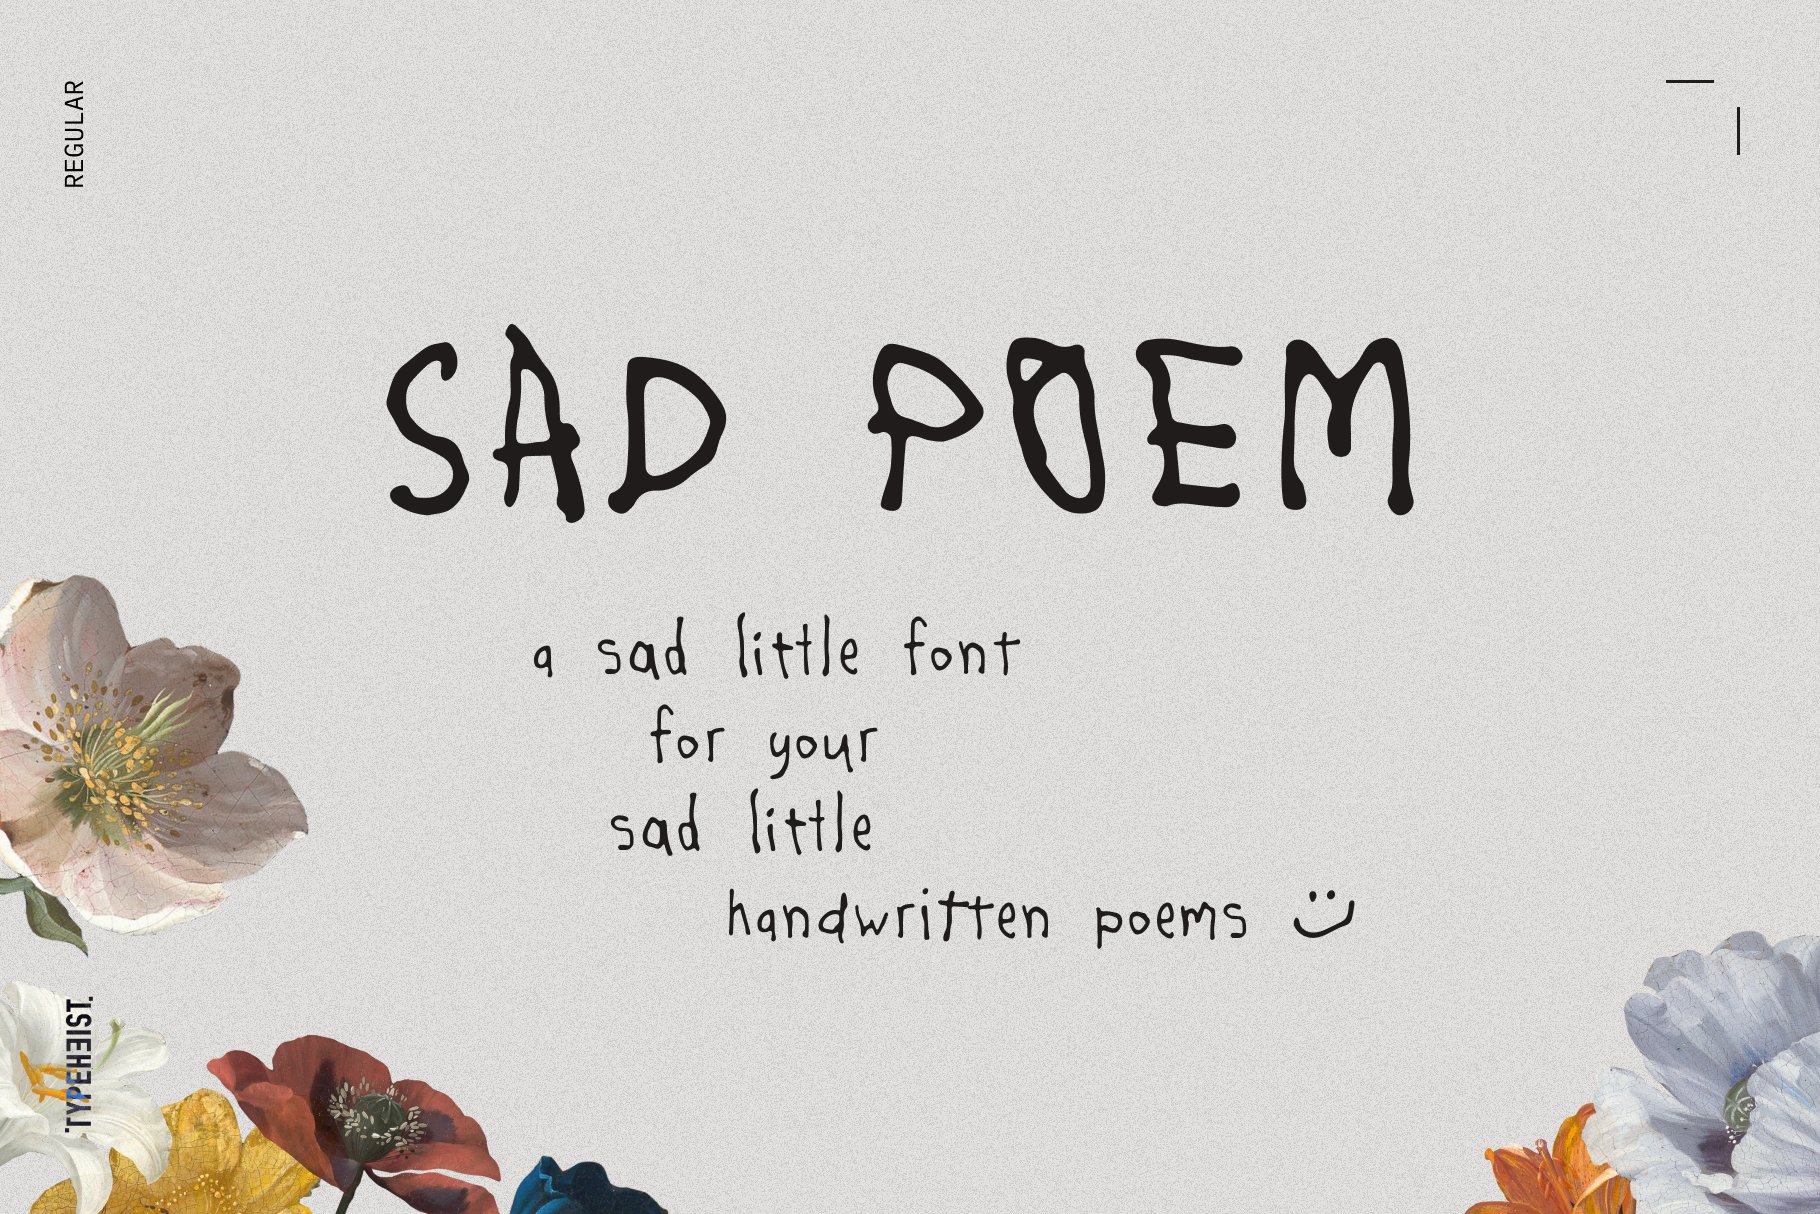 Sad Poem Messy Handwriting Font cover image.